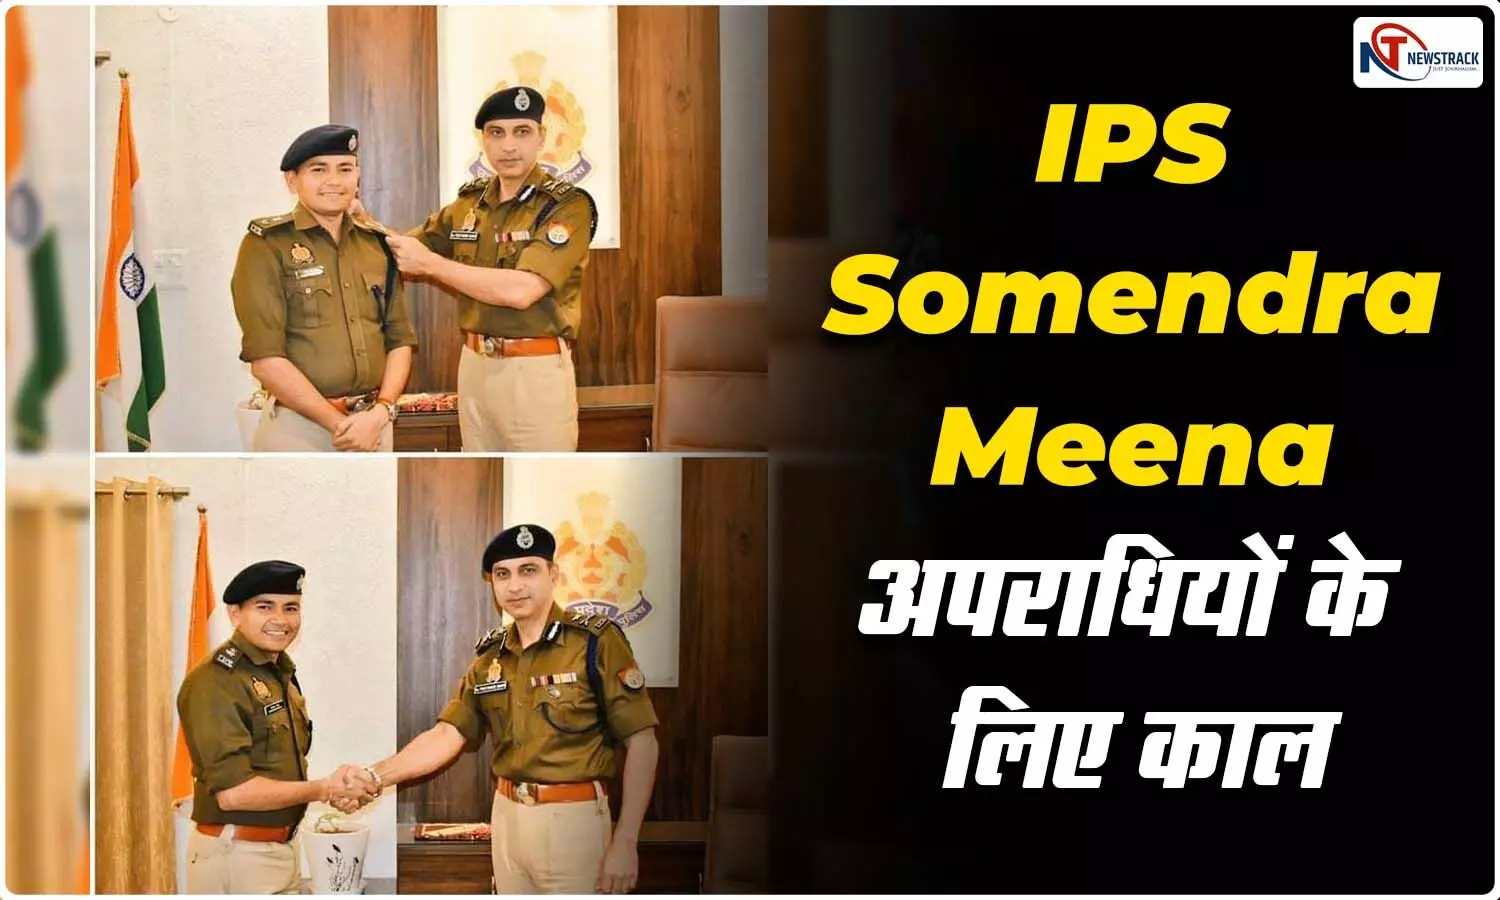 IPS Somendra Meena